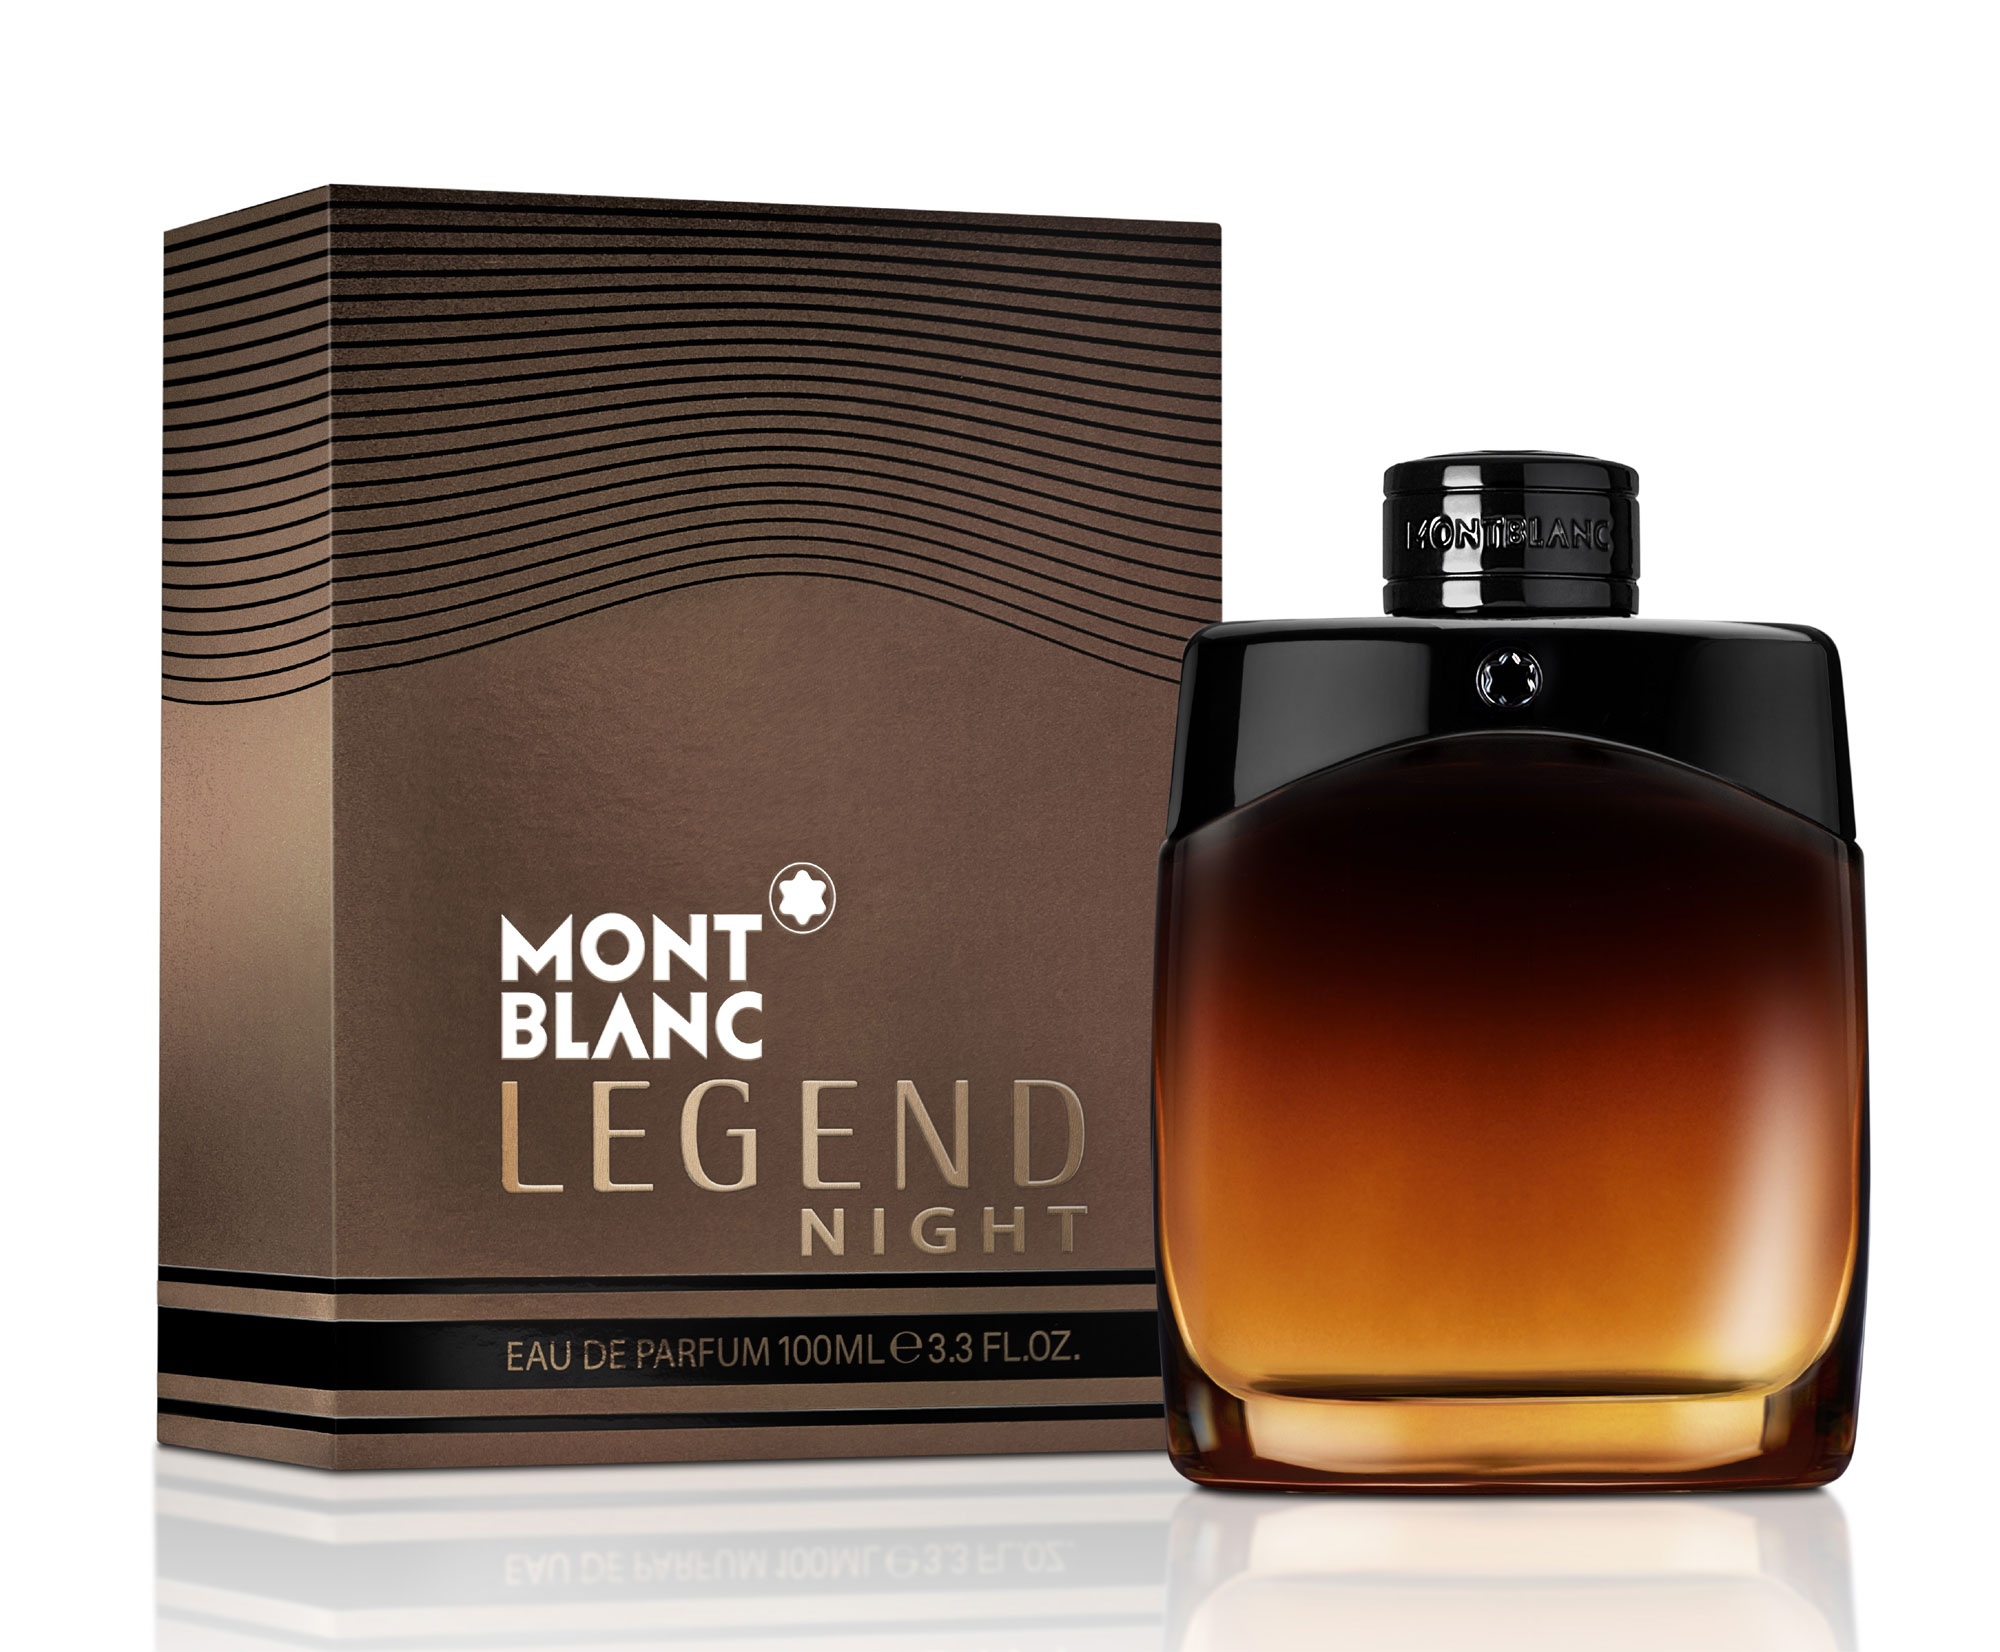 Парфюм легенда. Montblanc Legend) мужские 100 ml. Mont Blanc "Legend Night" 100 ml. Montblanc Legend Night men Tester 100ml EDP. Mont Blanc Legend Night for men EDP 100ml.